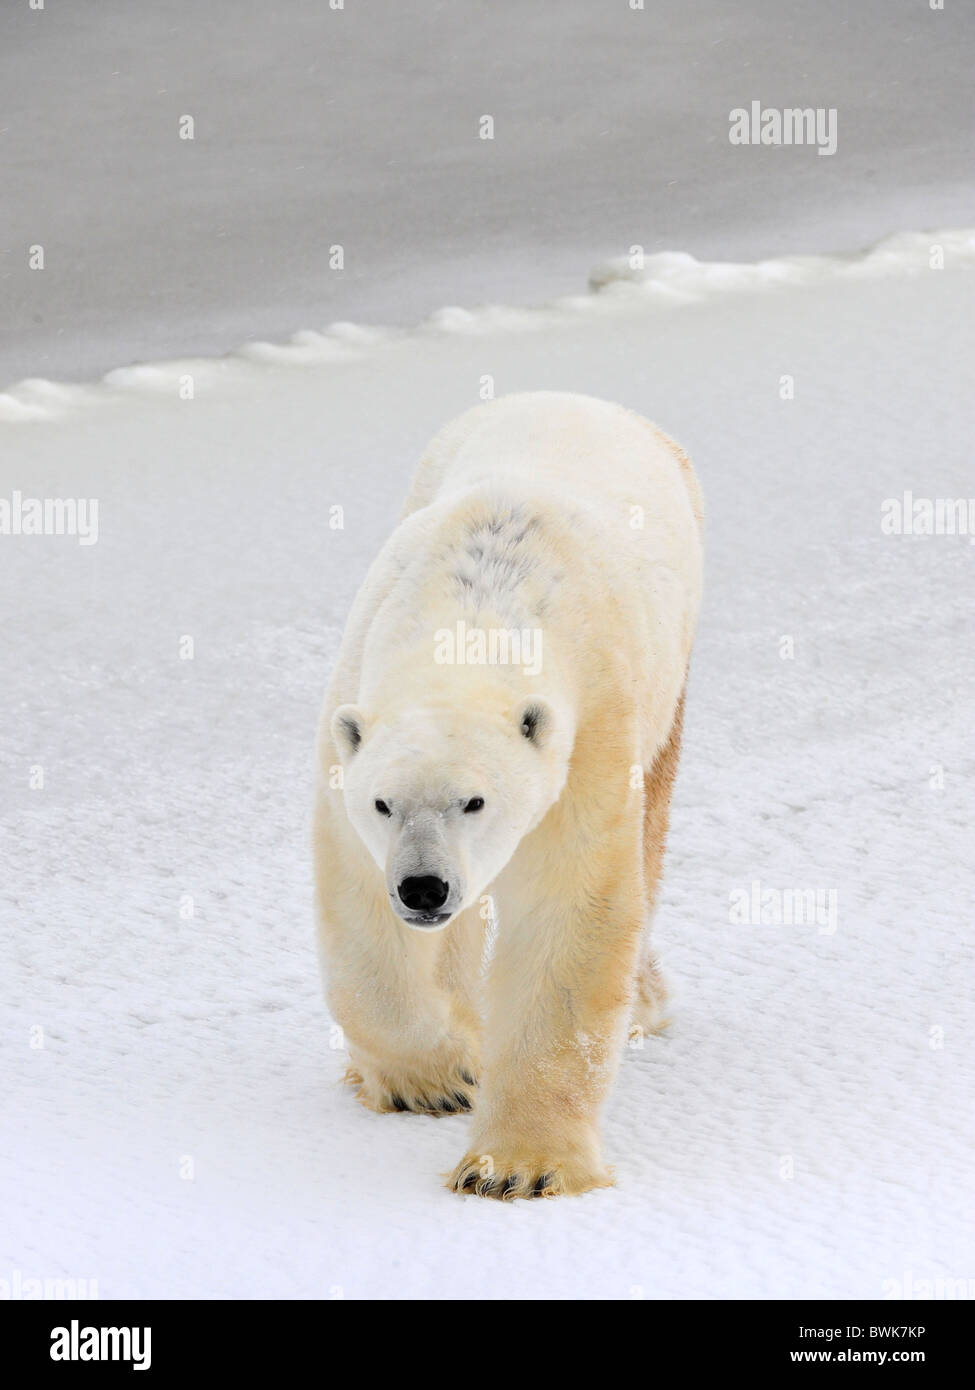 Polar bear in a native habitat. Snow. A frost. Winter. Stock Photo